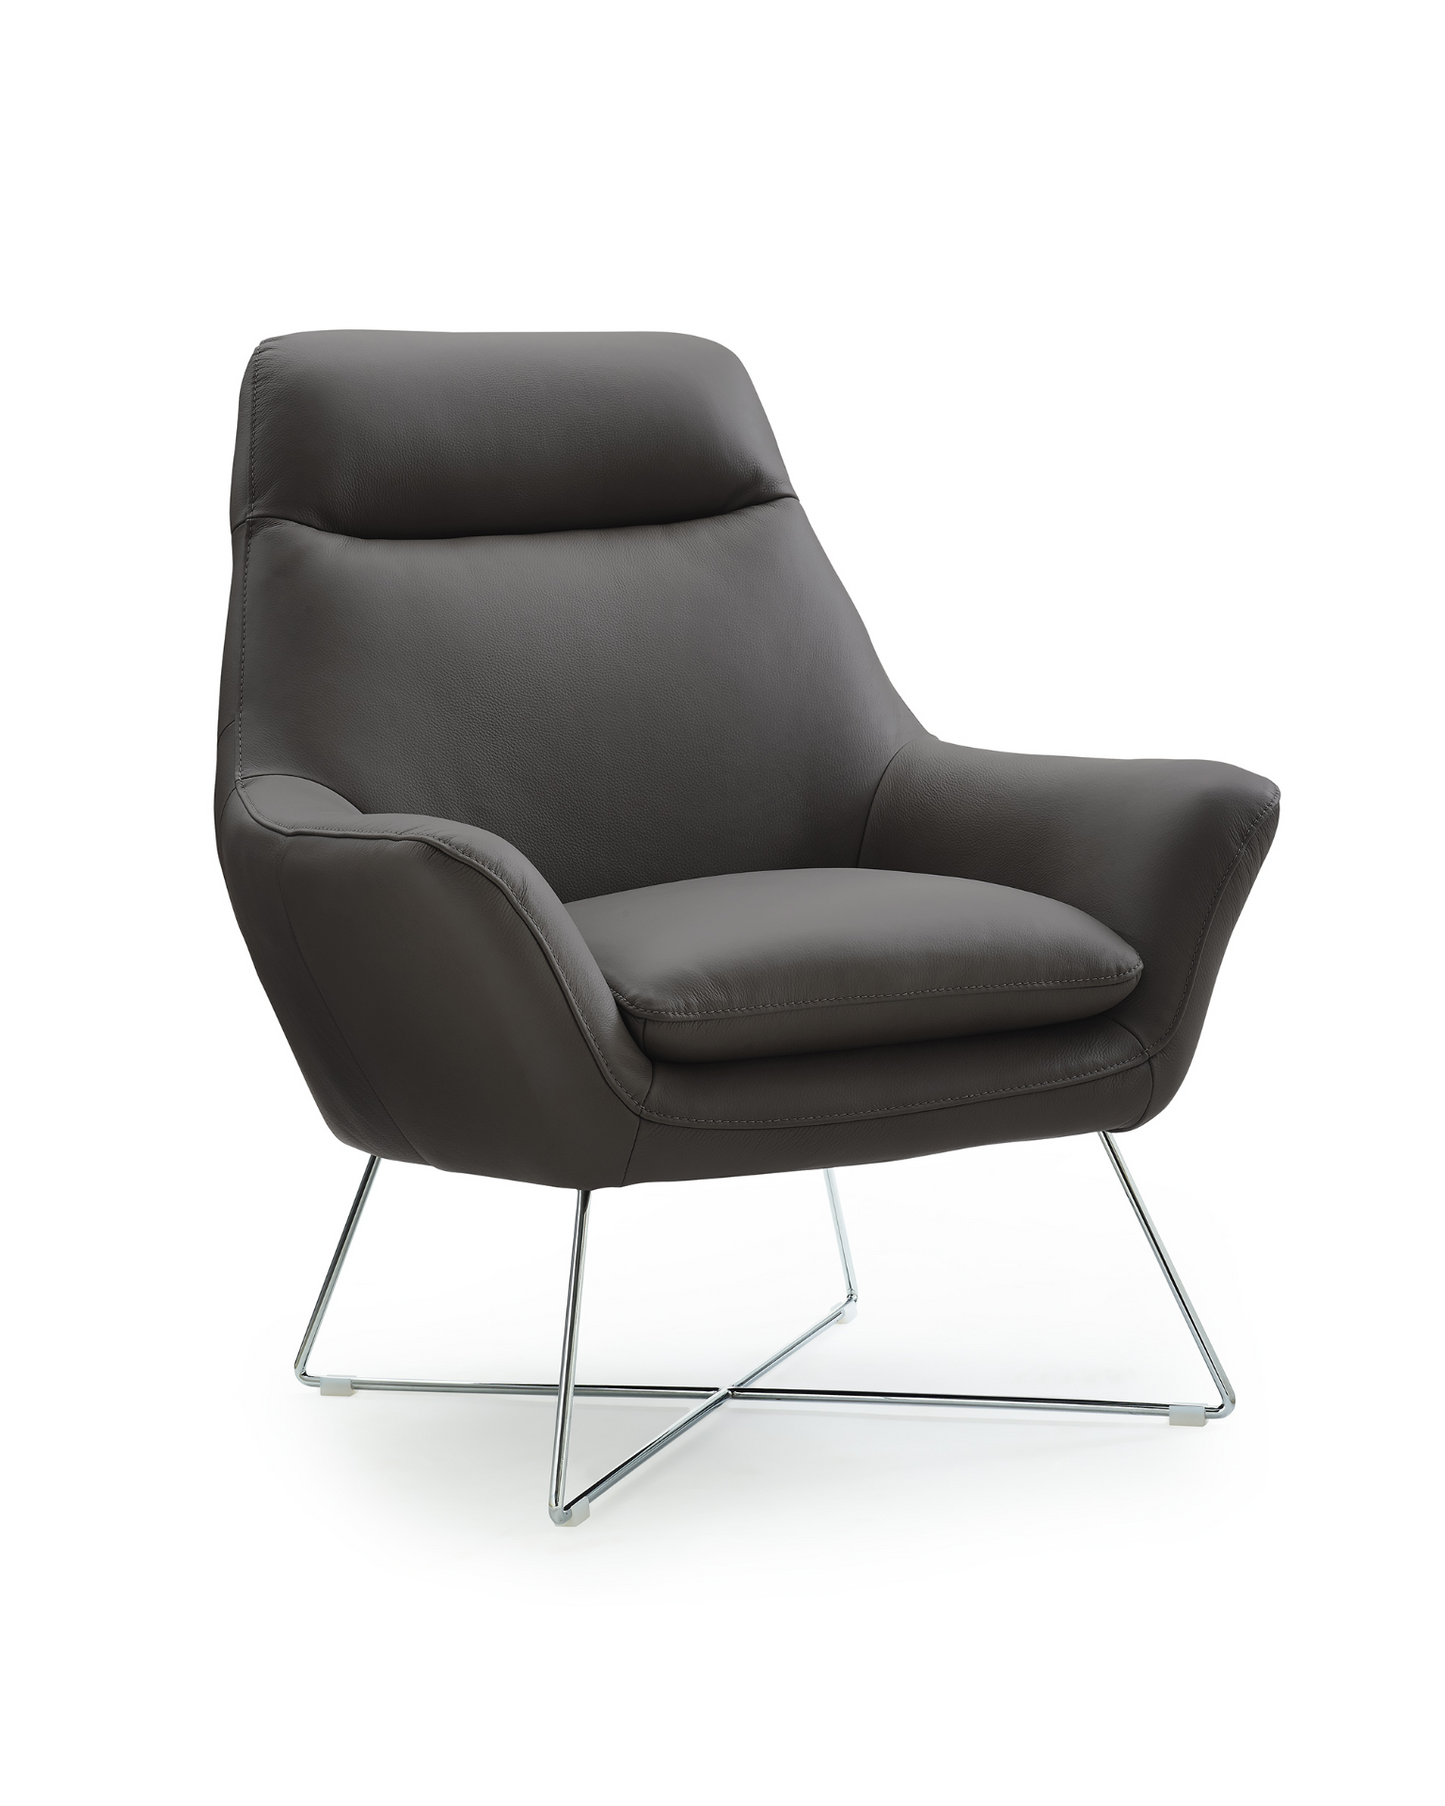 Top Grain Italian Leather Accent Chair - Modern Dark Gray